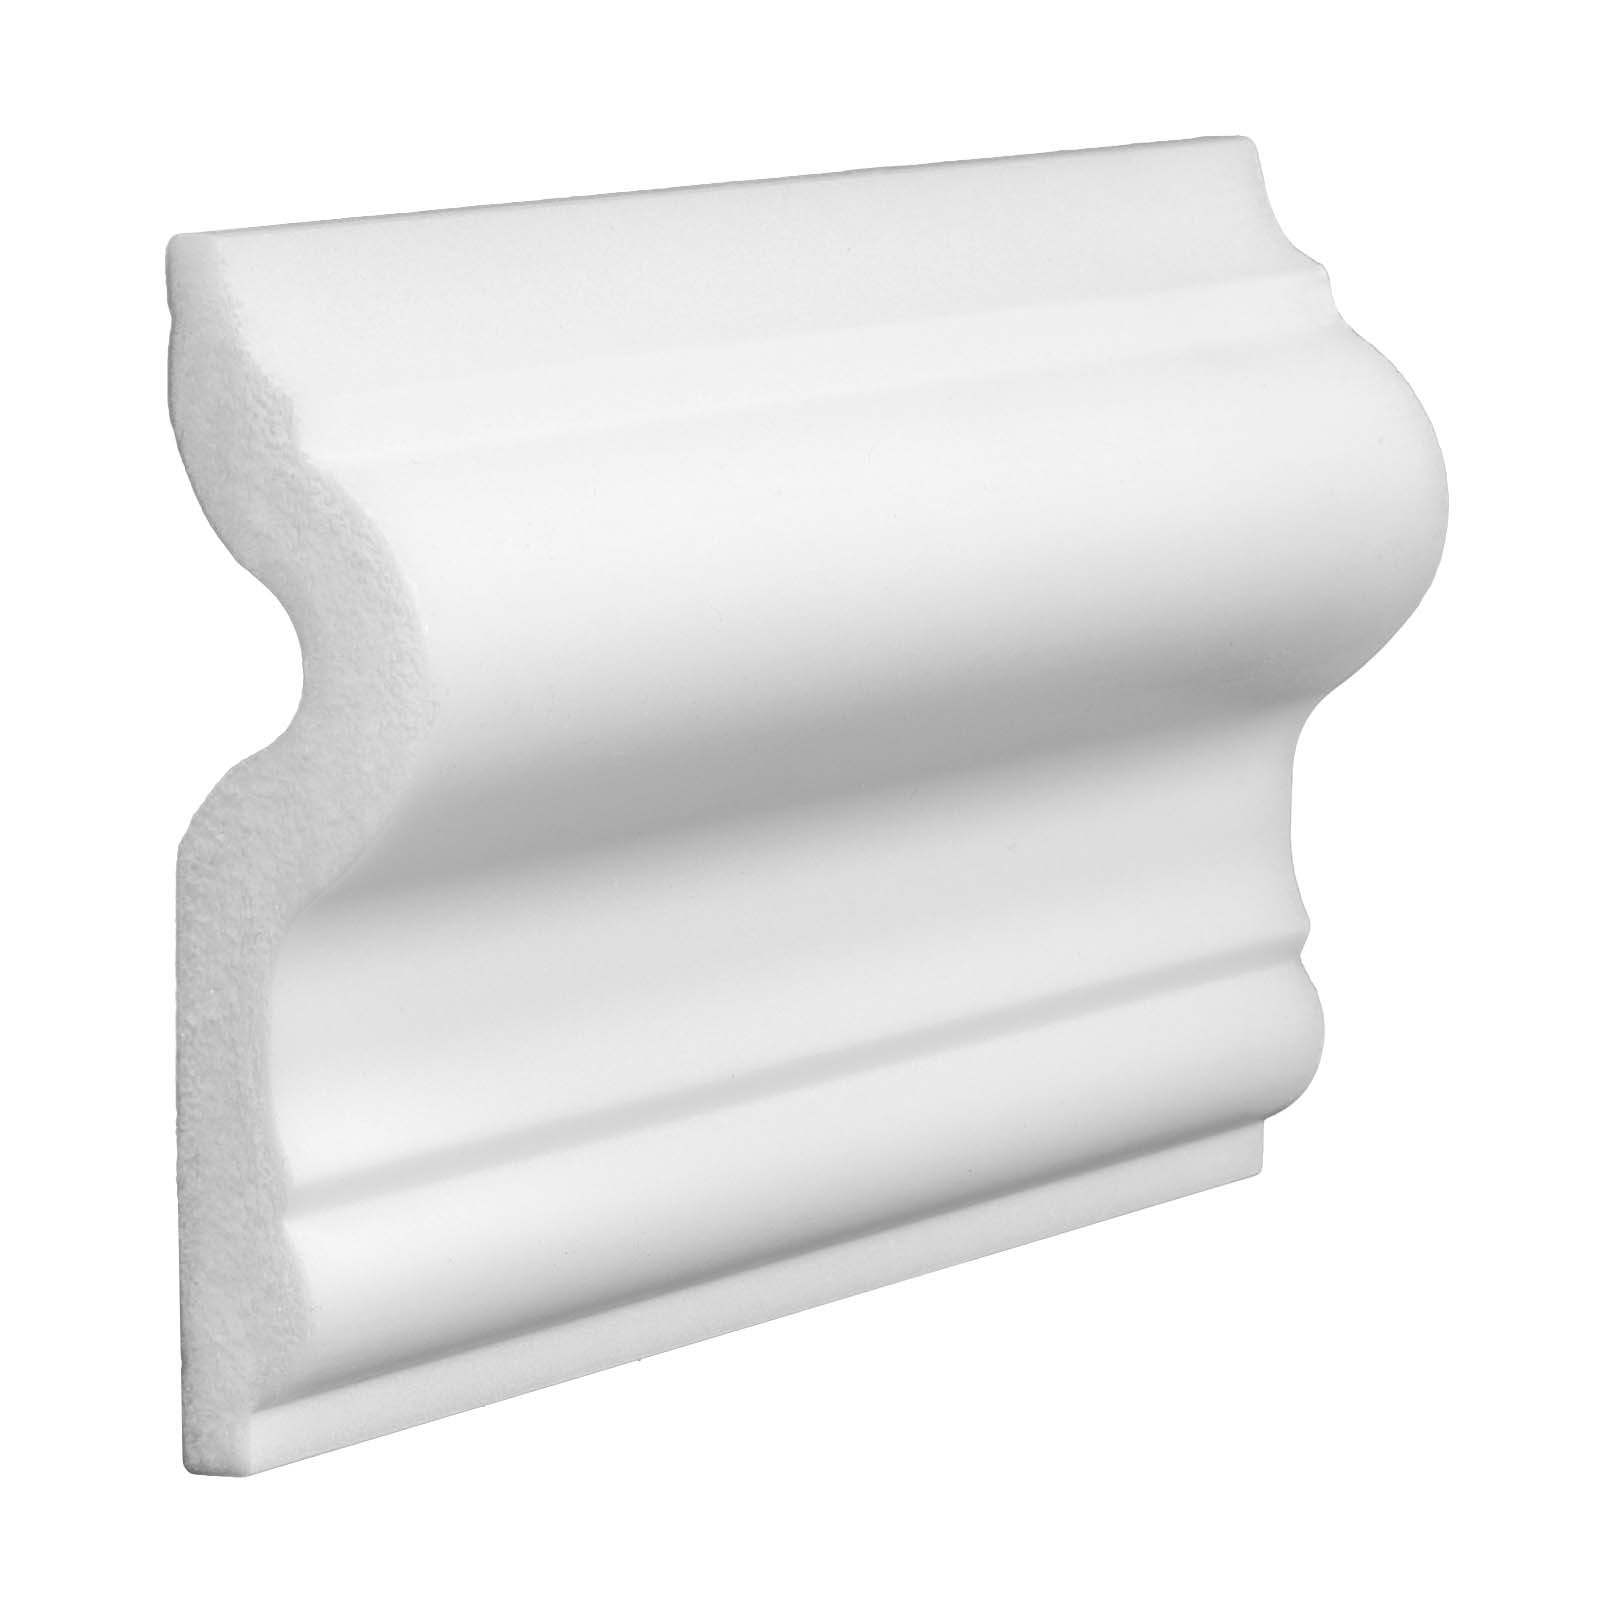 PX164 - Axxent Plain Duropolymer Panel Molding, Primed White. Length